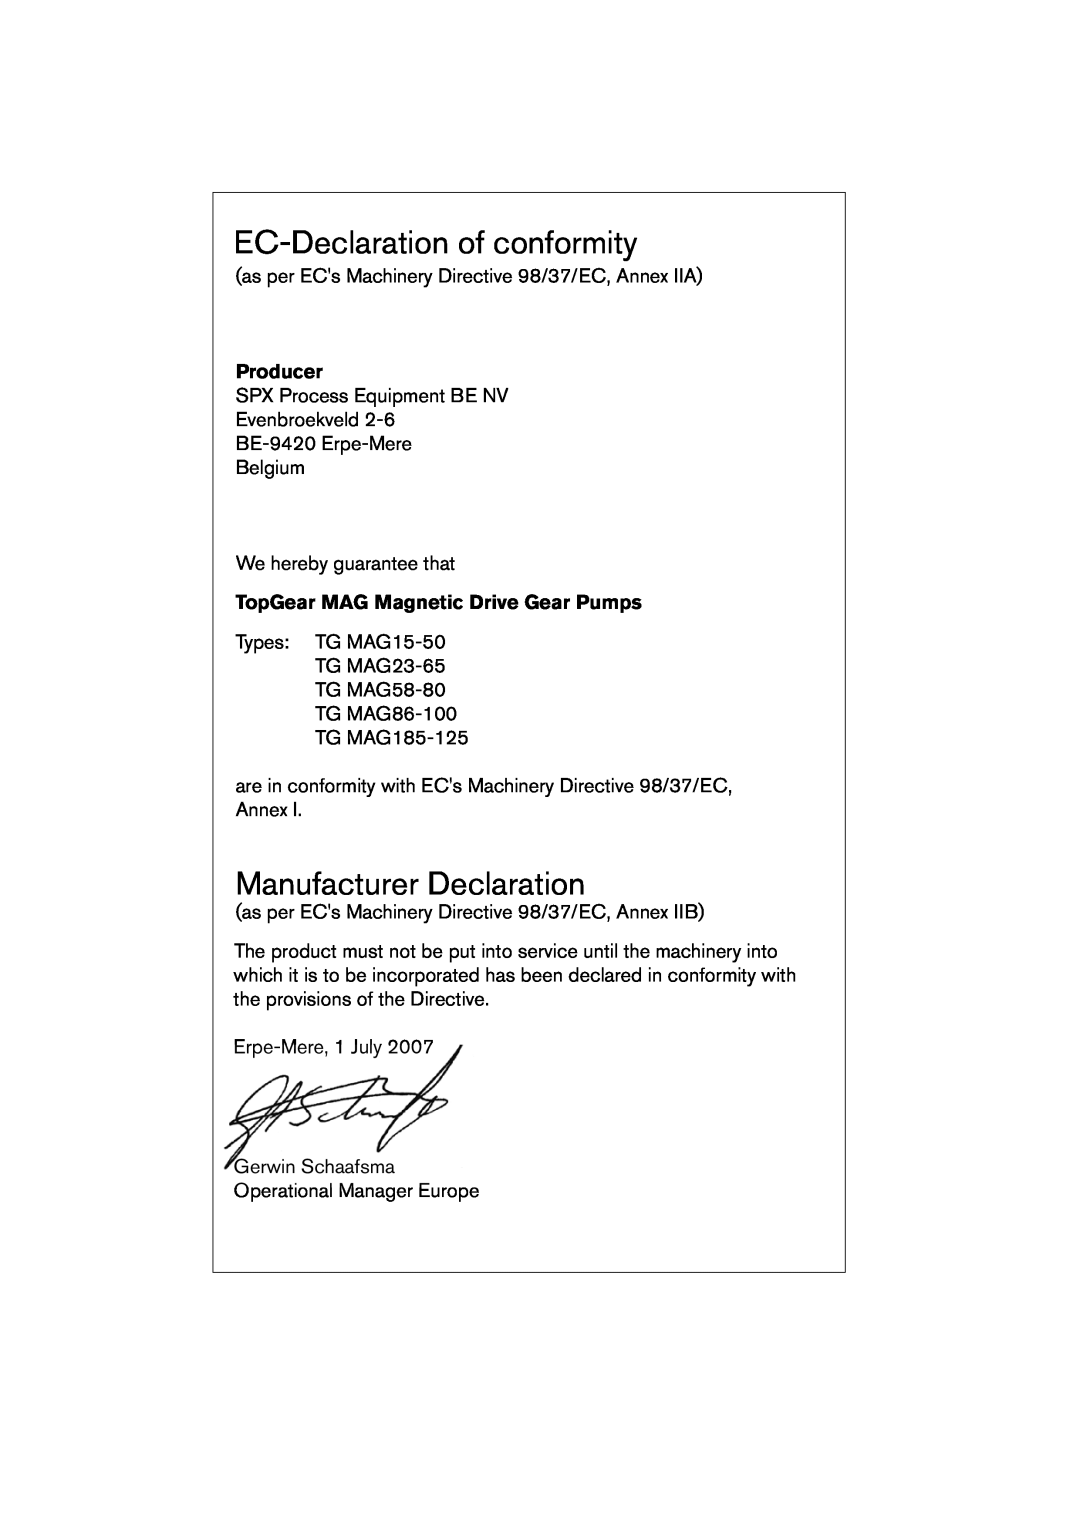 SPX Cooling Technologies TG MAG58-80, TG MAG185-125 EC-Declarationof conformity, Manufacturer Declaration, Producer 